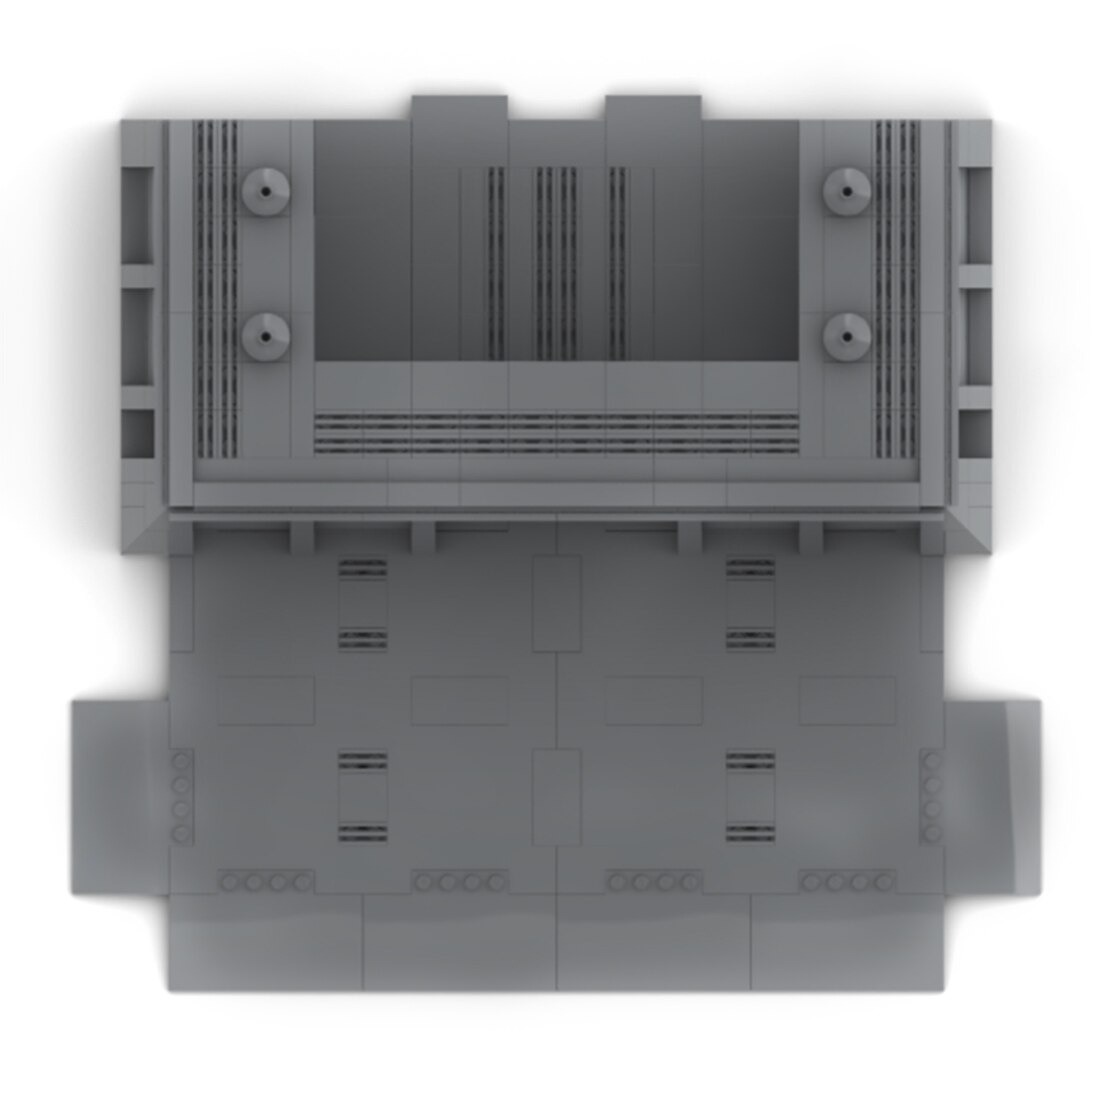 Sci-Fi Space Wars Modular Escape Pod Model MOC-96787 Space With 389pcs -  MOC Brick Land